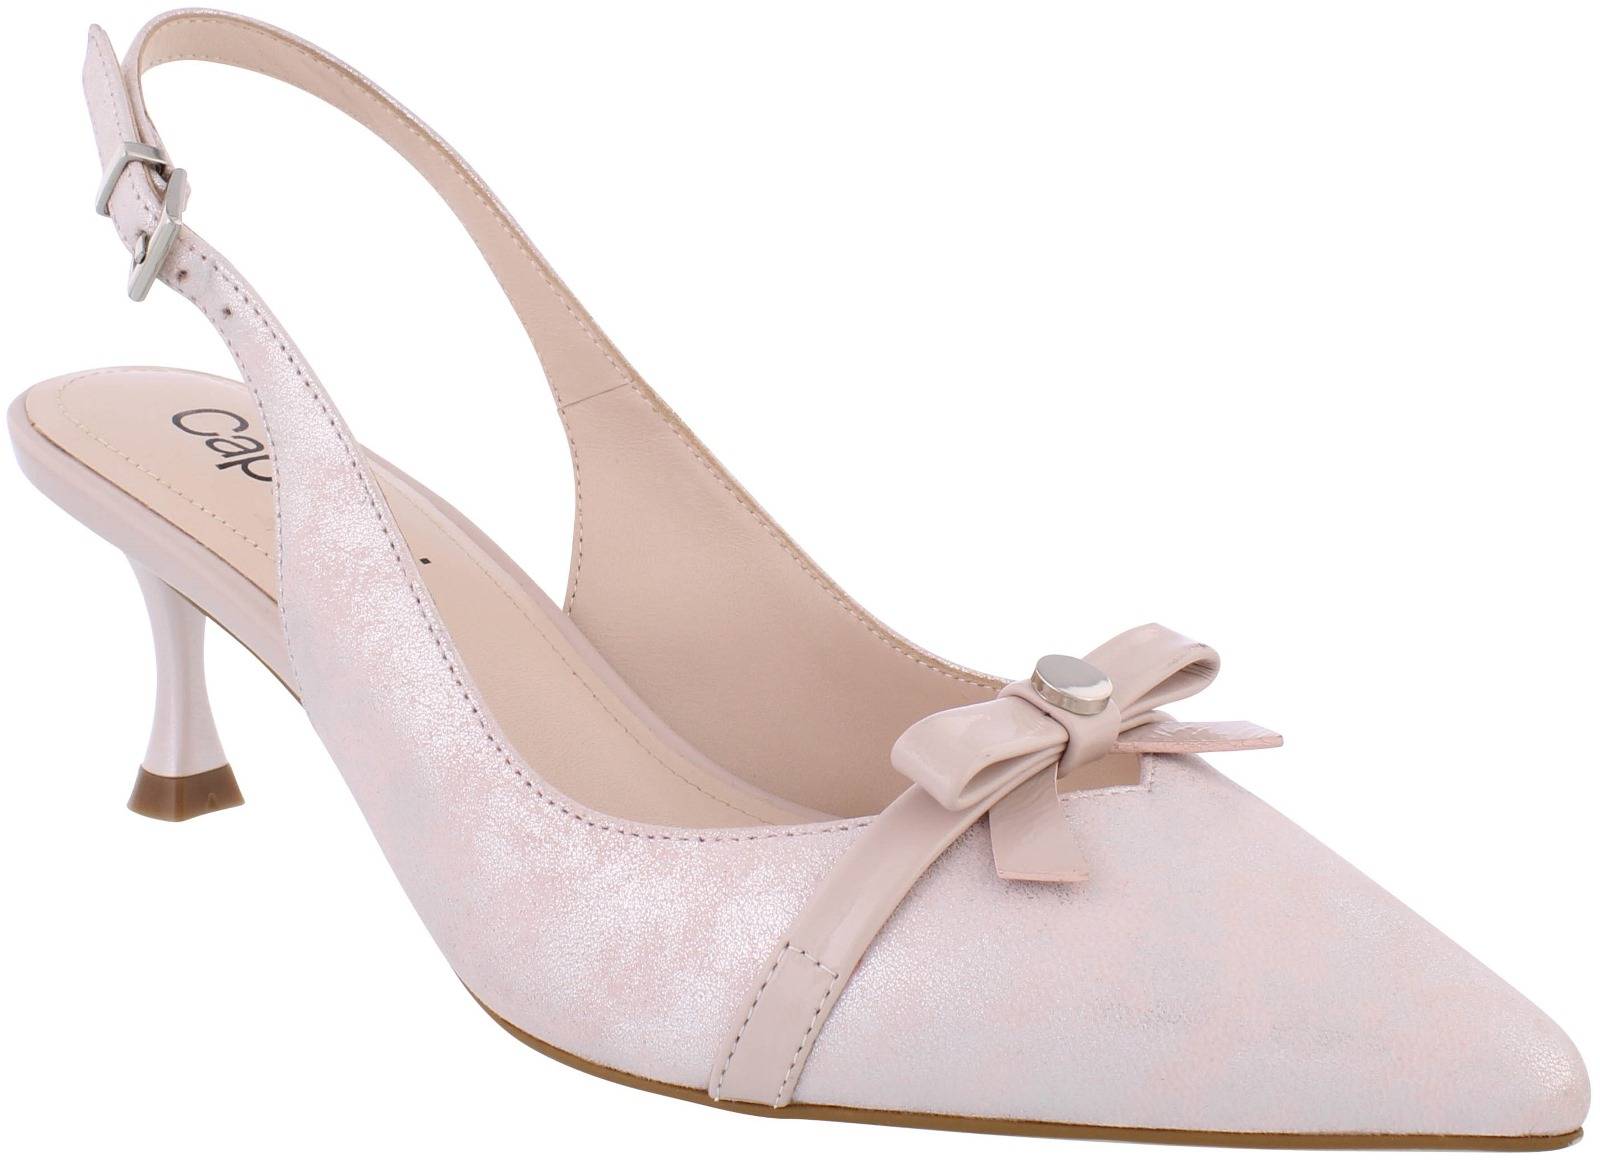 Allegra Pink Sling Shoe